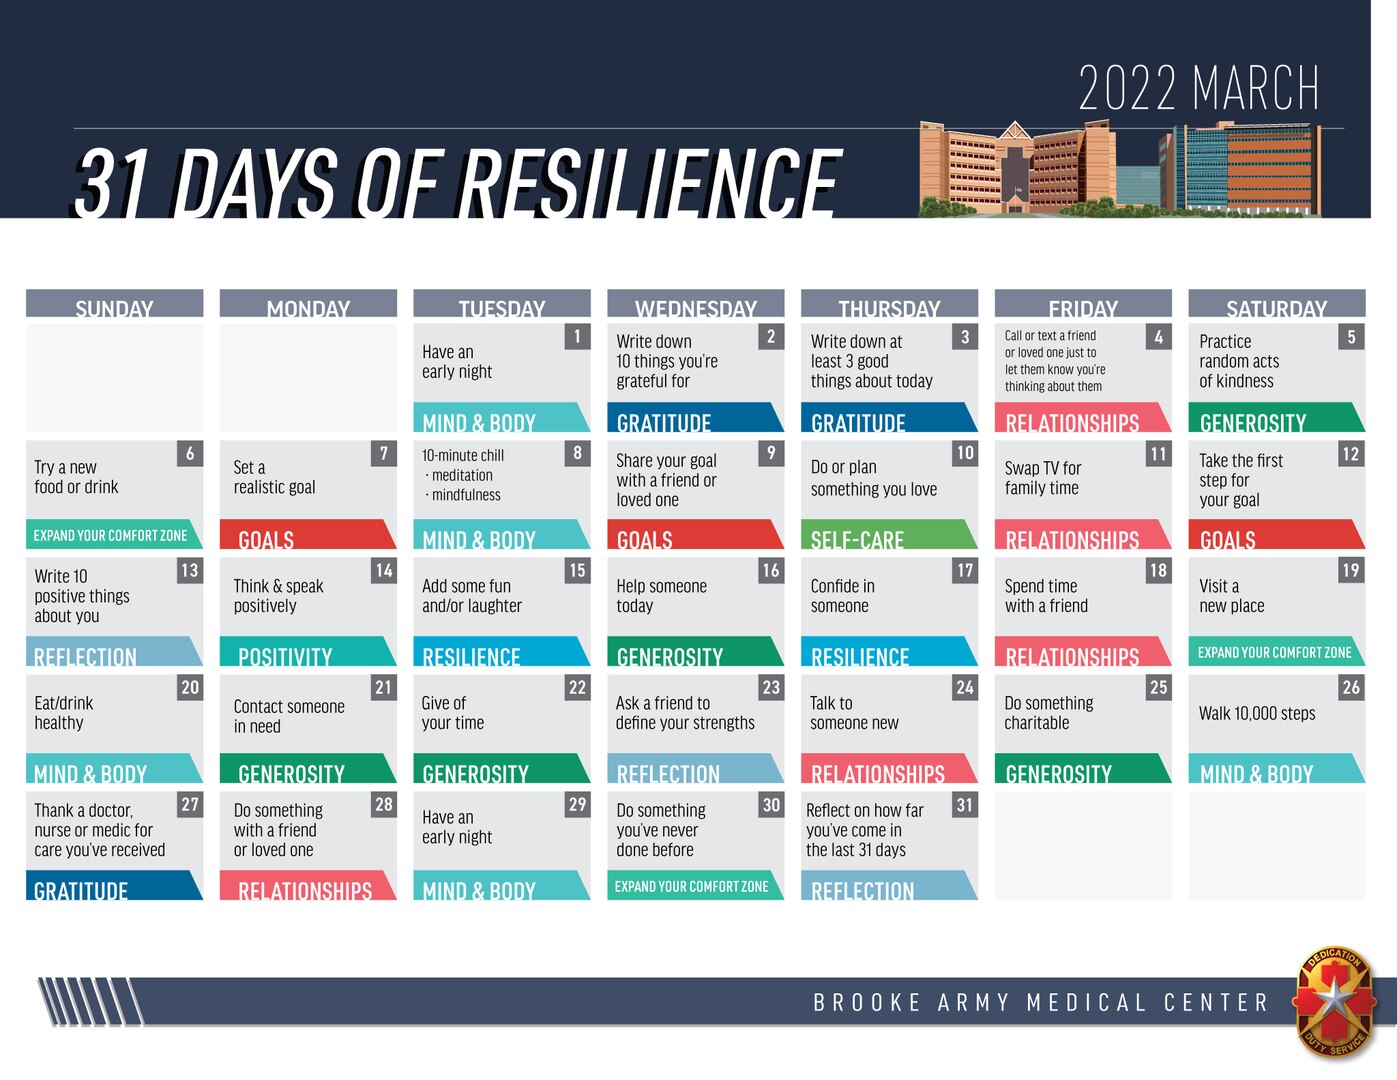 31 Days of Resilience calendar